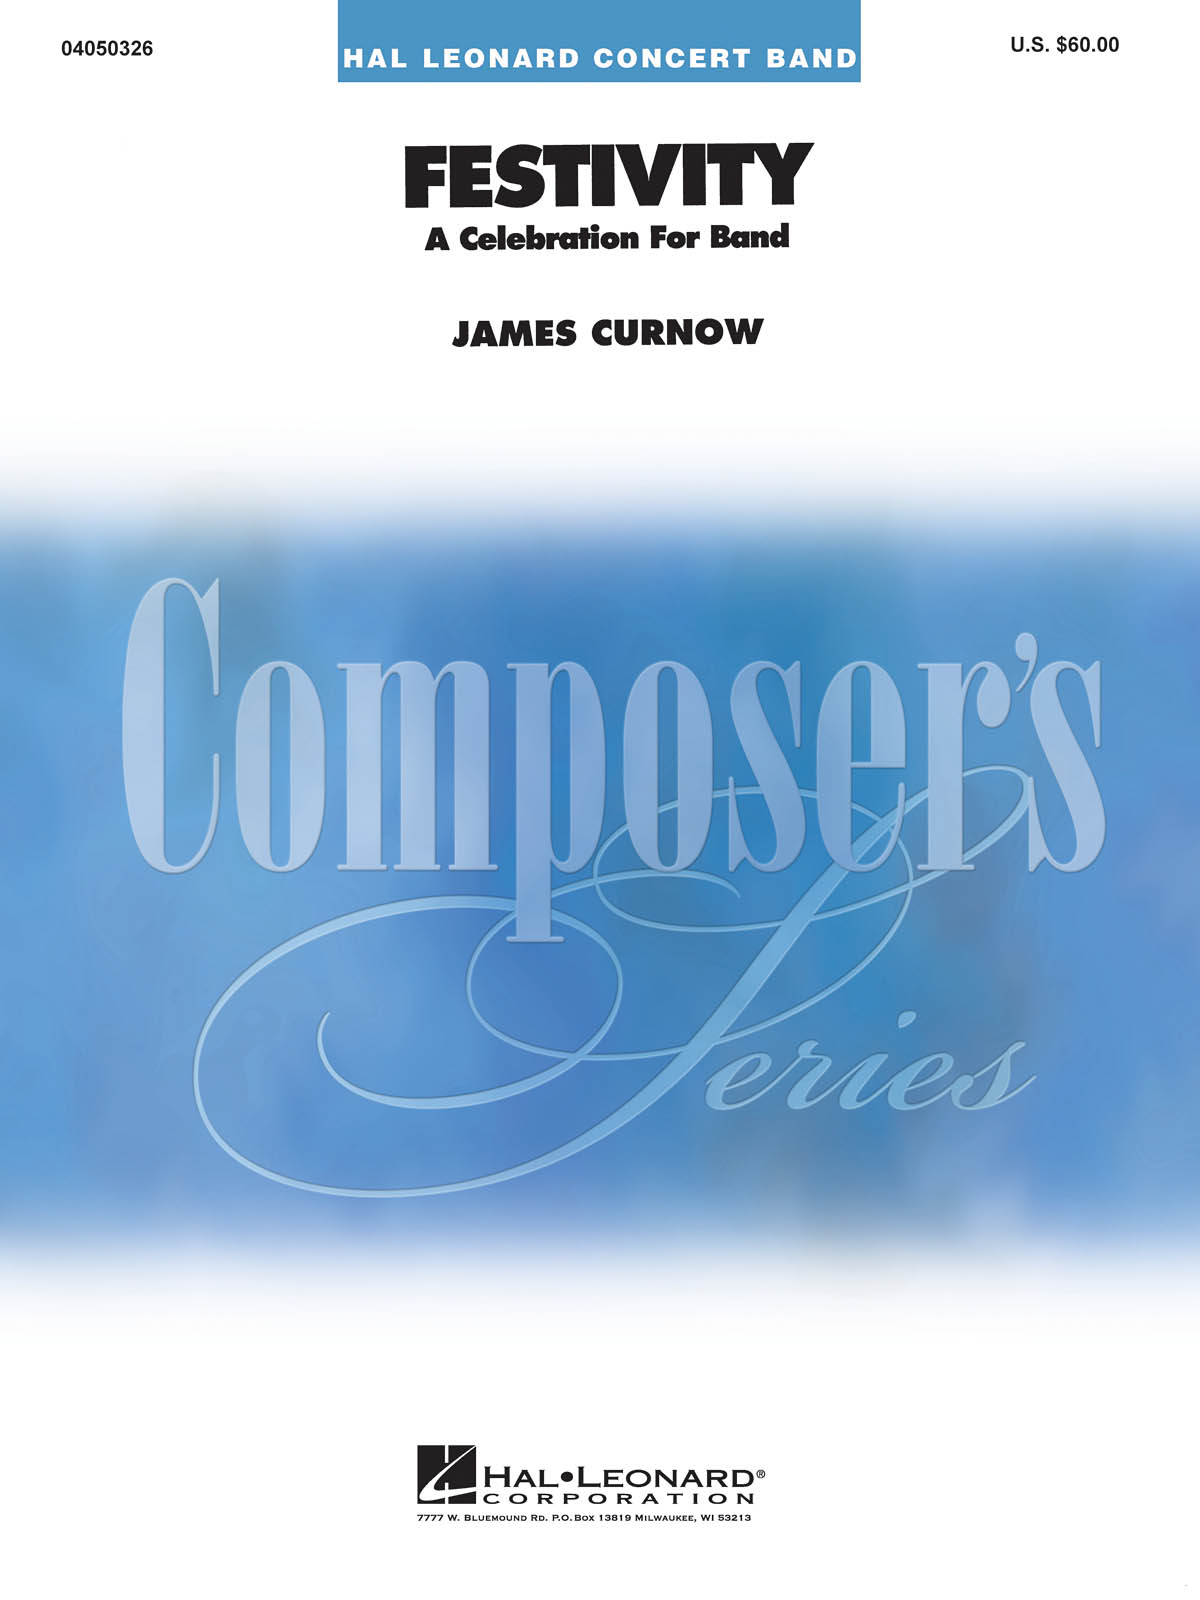 James Curnow: Festivity: Concert Band: Score